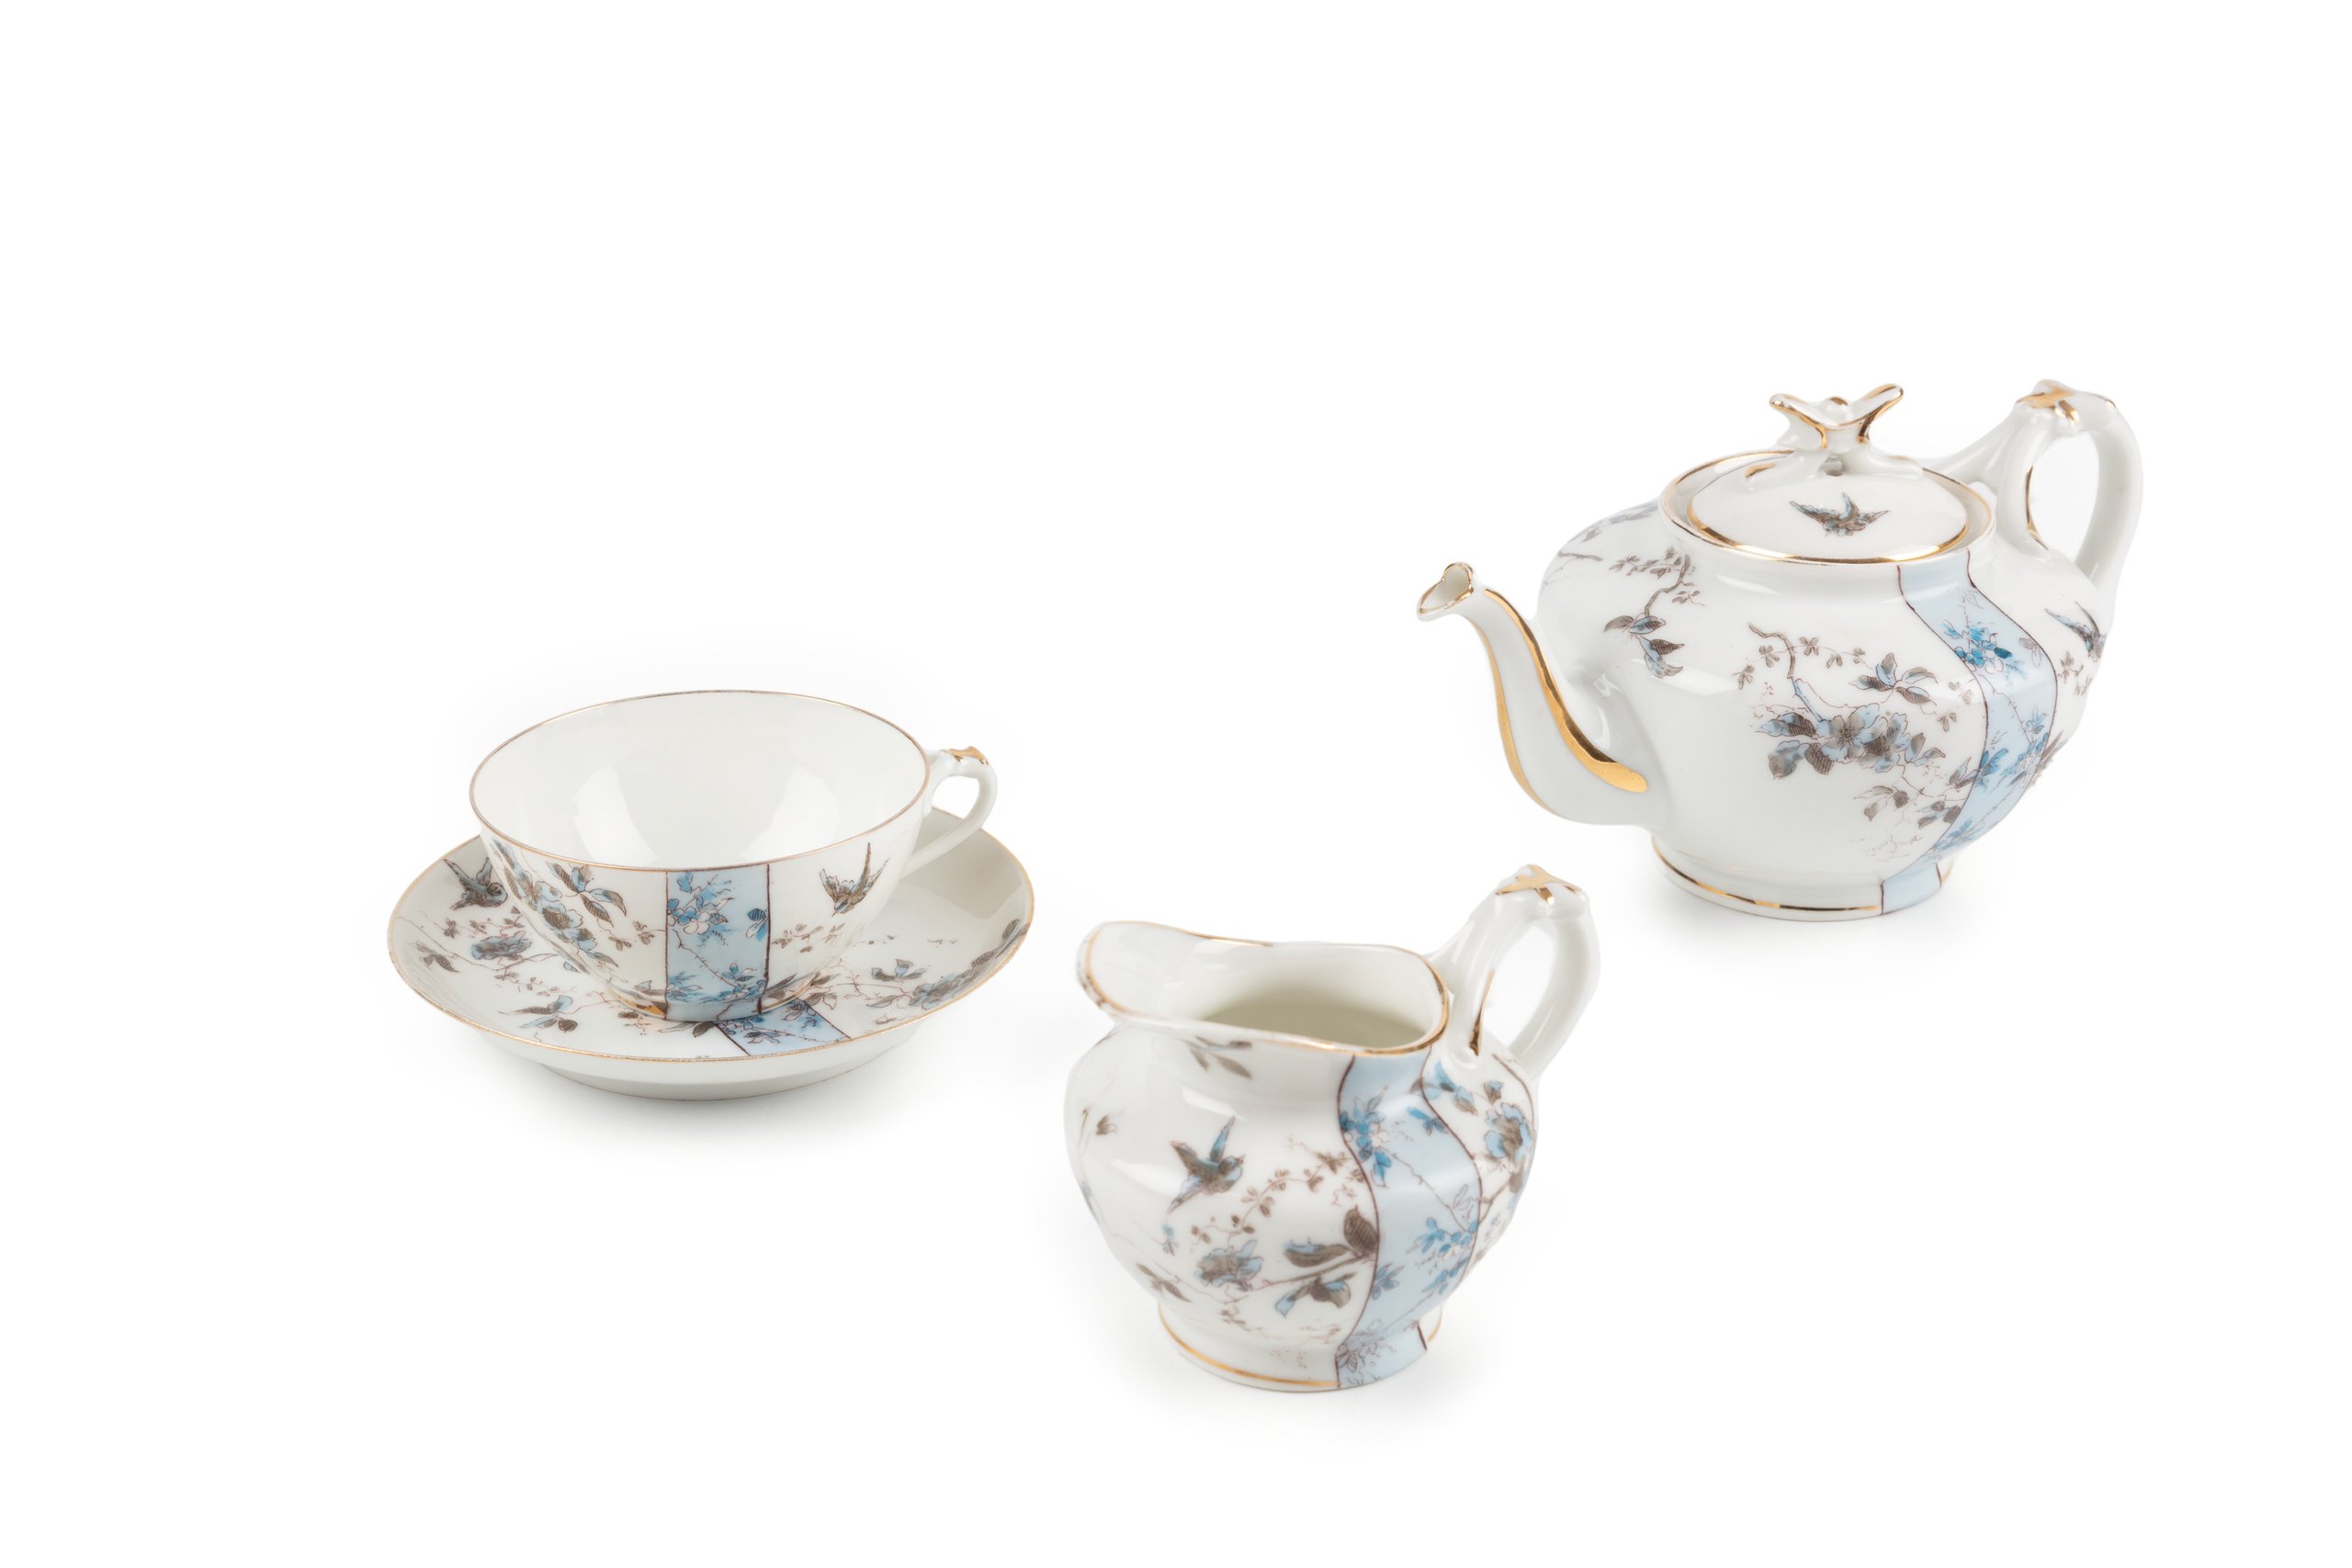 Porcelain tea service set used by the Wane family